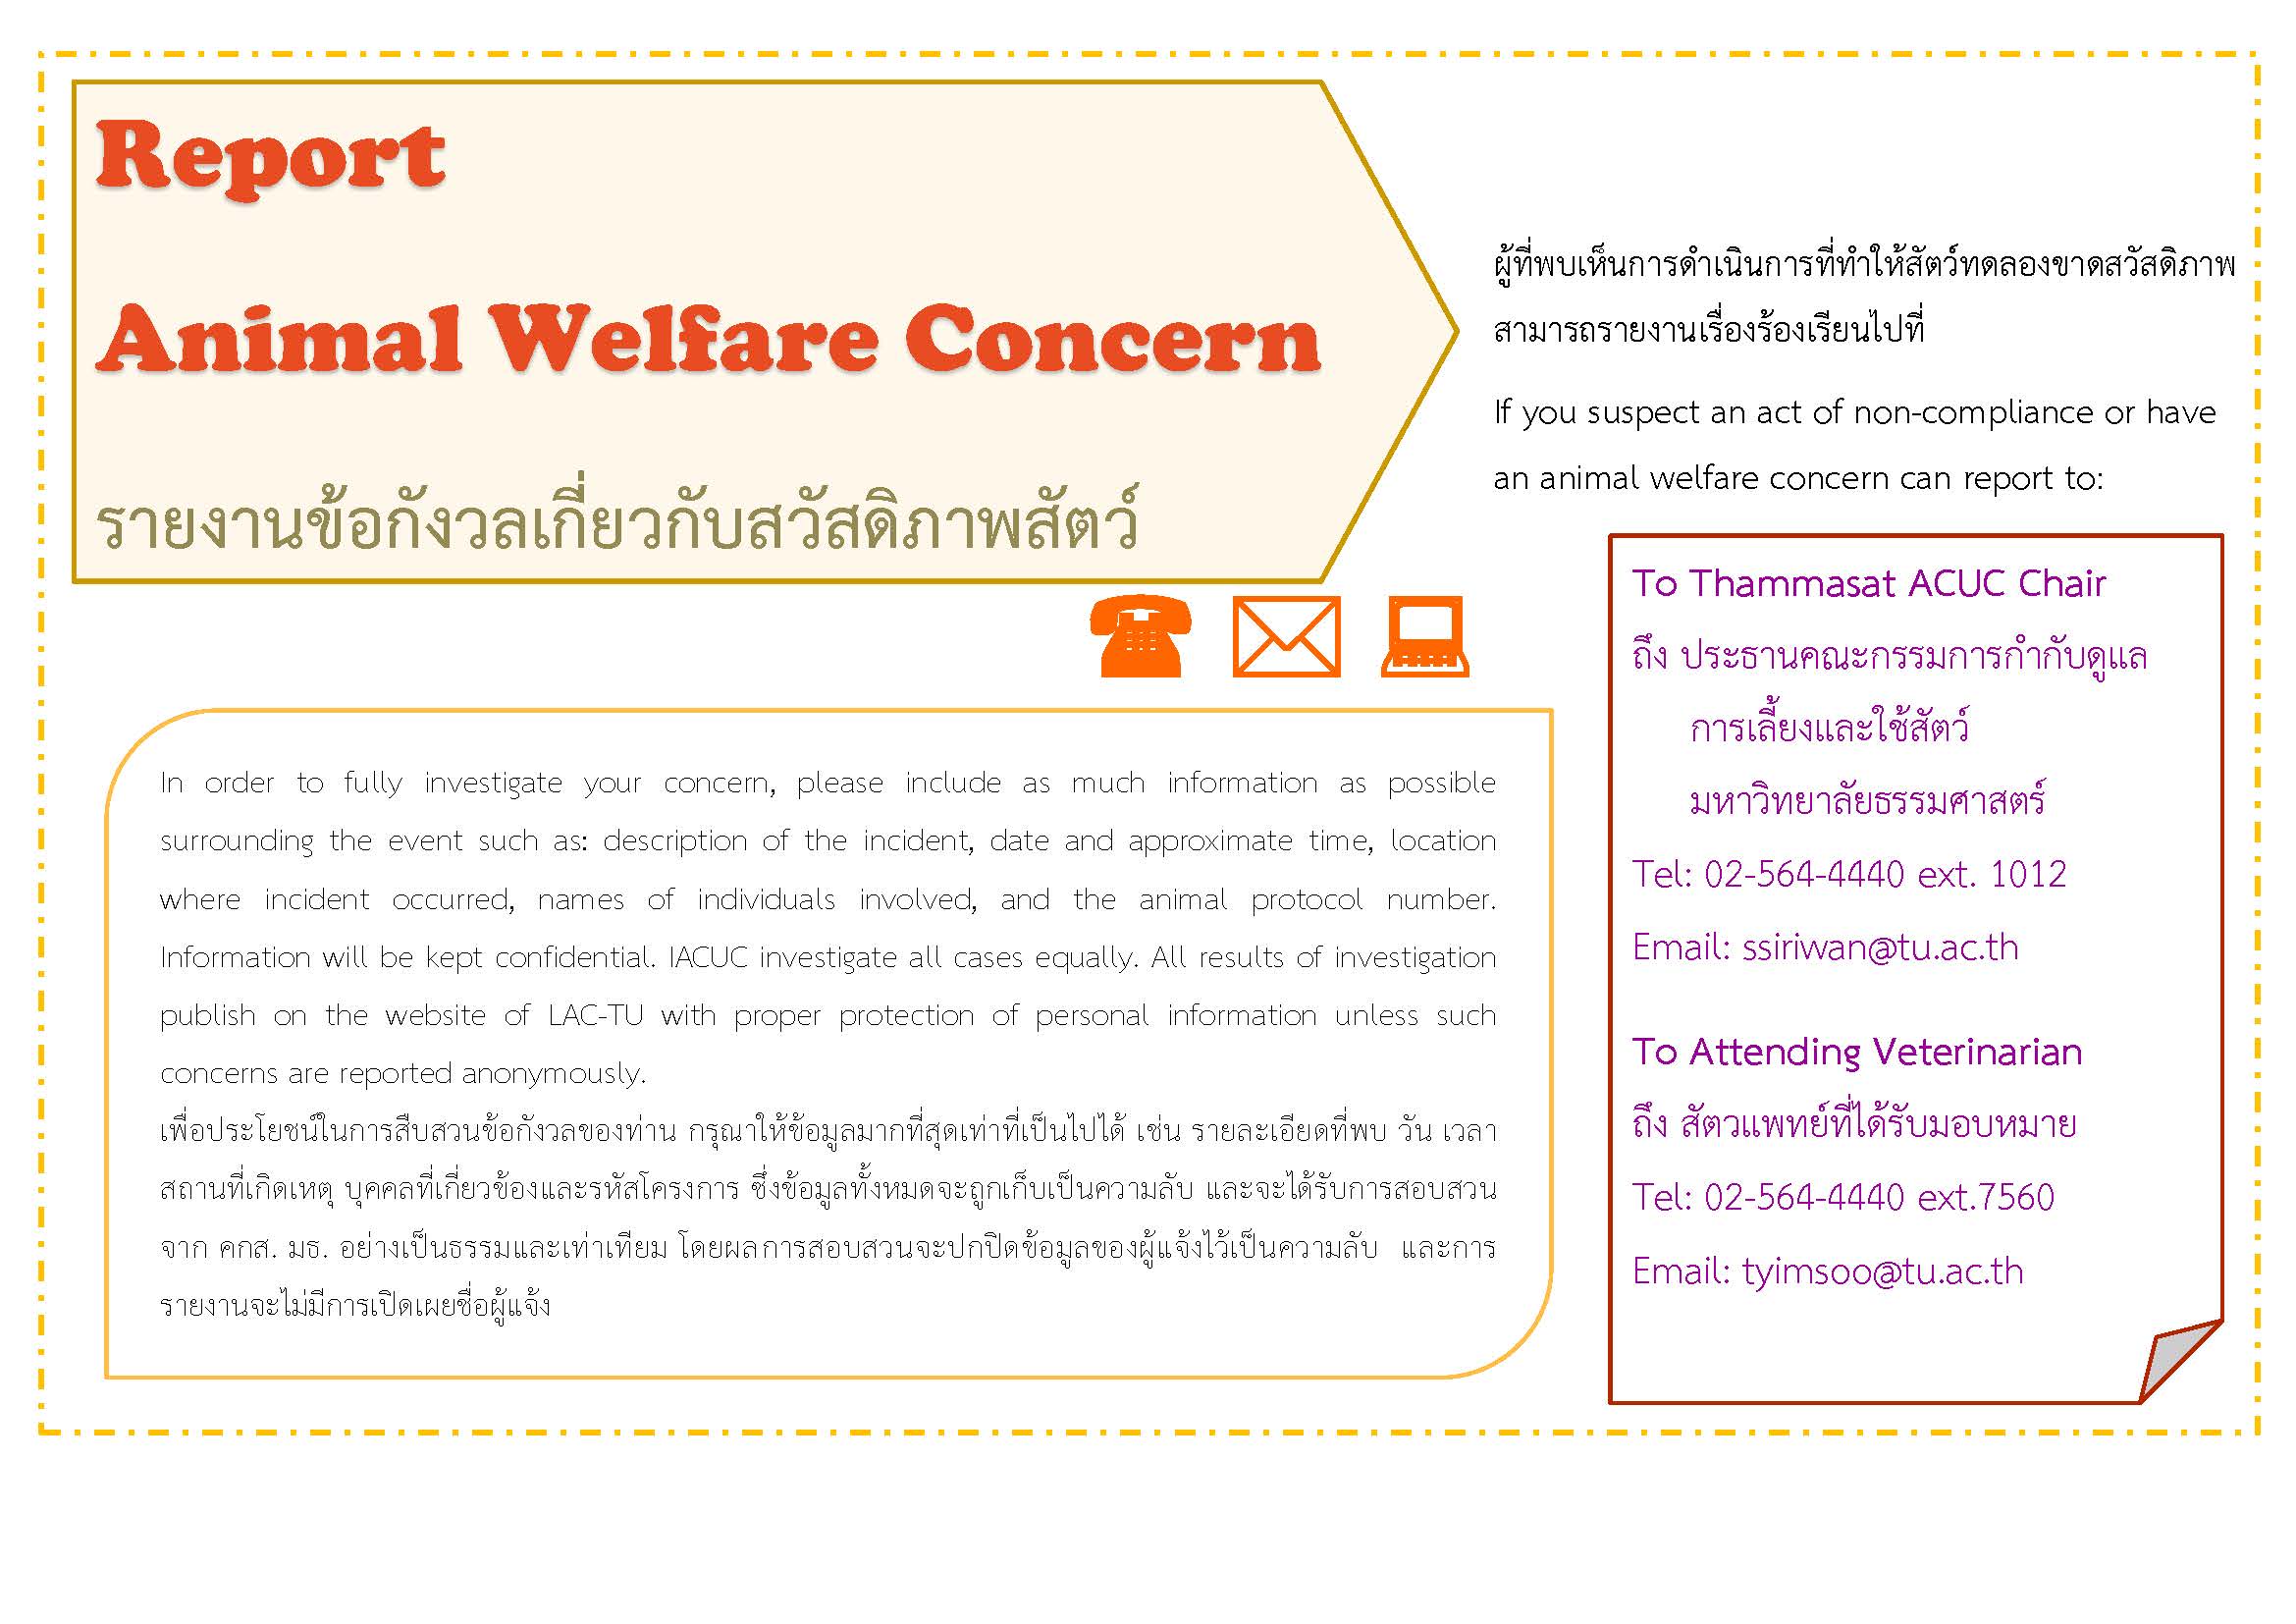 Report Animal Welfare Concerns